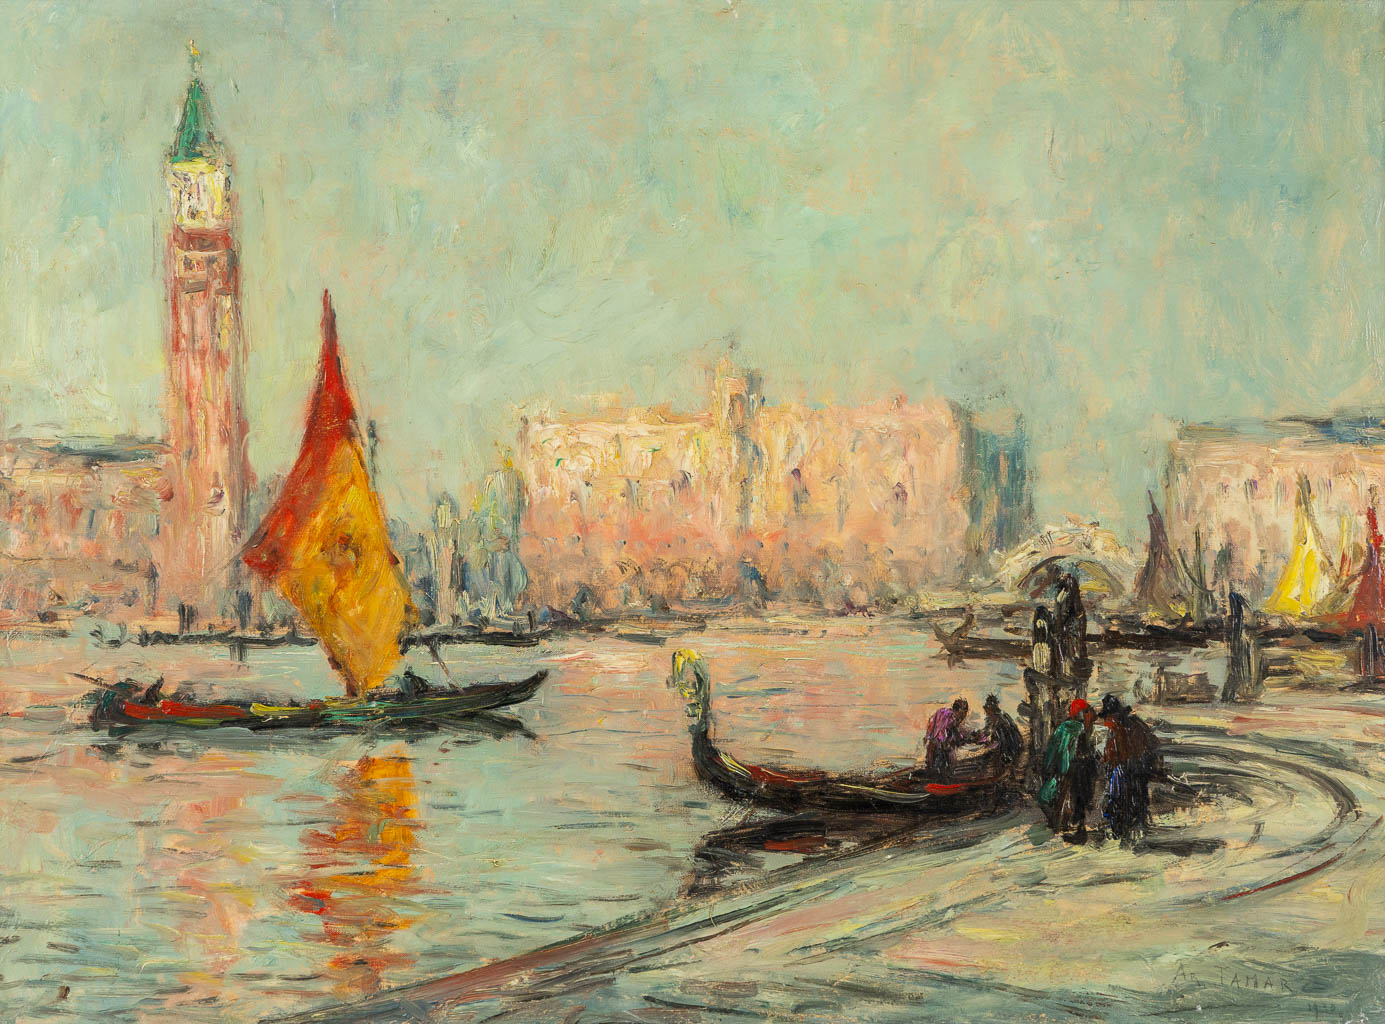  Armand JAMAR (1870-1946) 'View on Venice, Italy' 1930